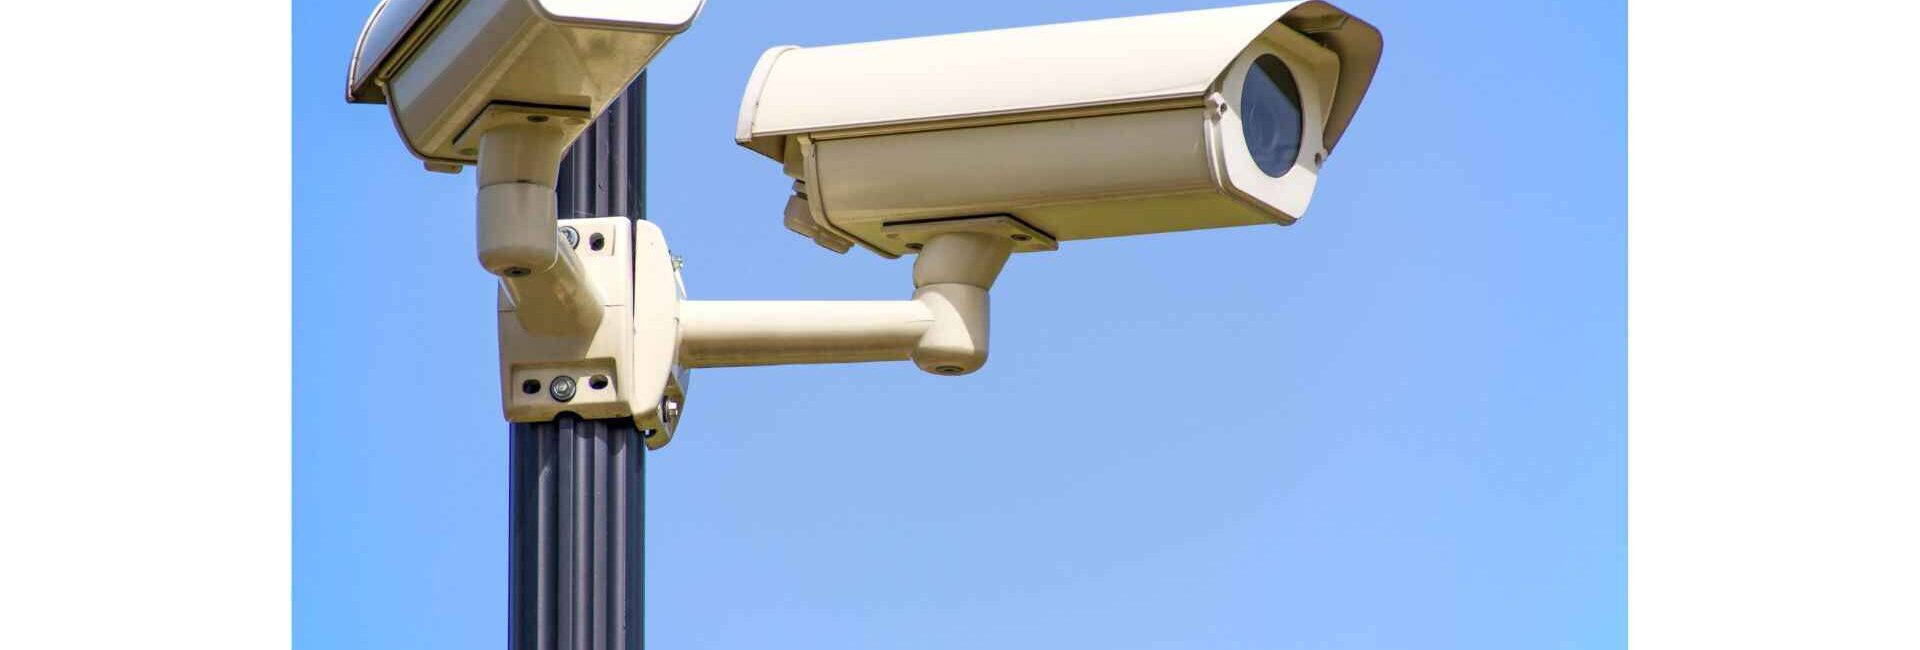 Extra Security Solutions - CCTV Dealer in Noida